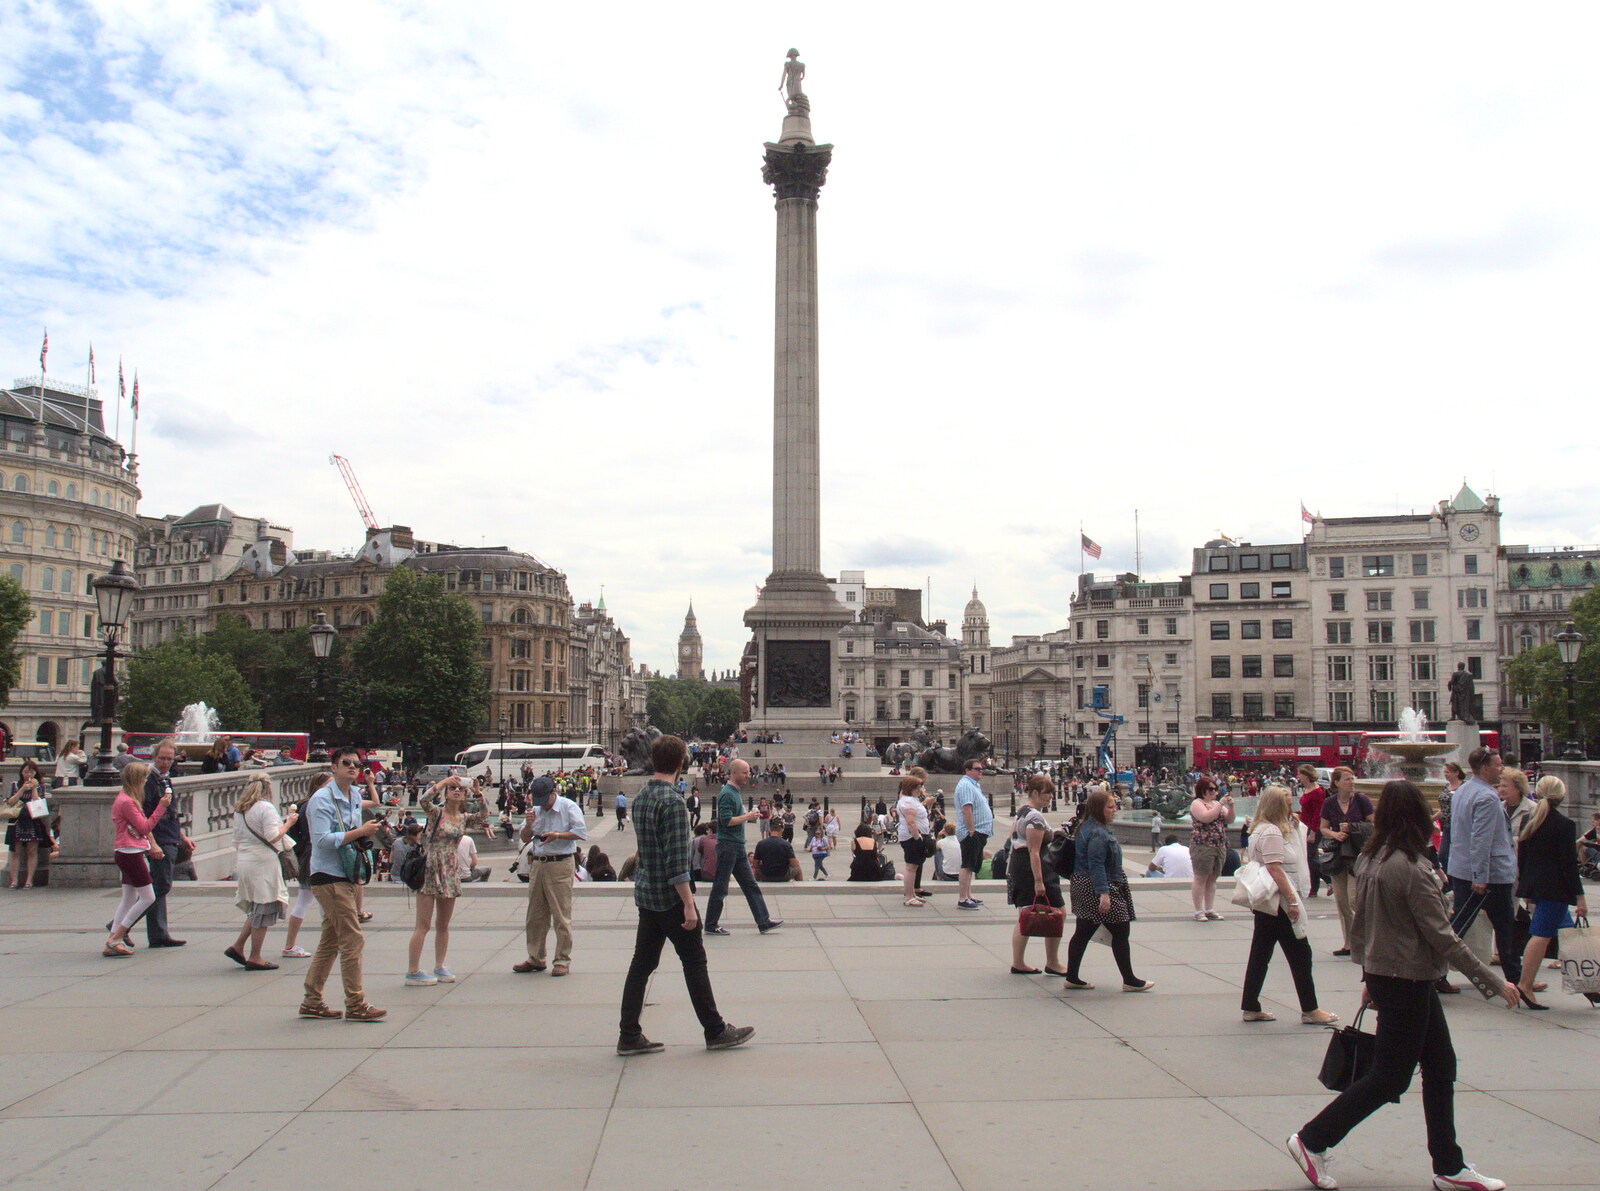 Trafalgar Square is heaving from SwiftKey Innovation Days, The Haymarket, London - 27th June 2014